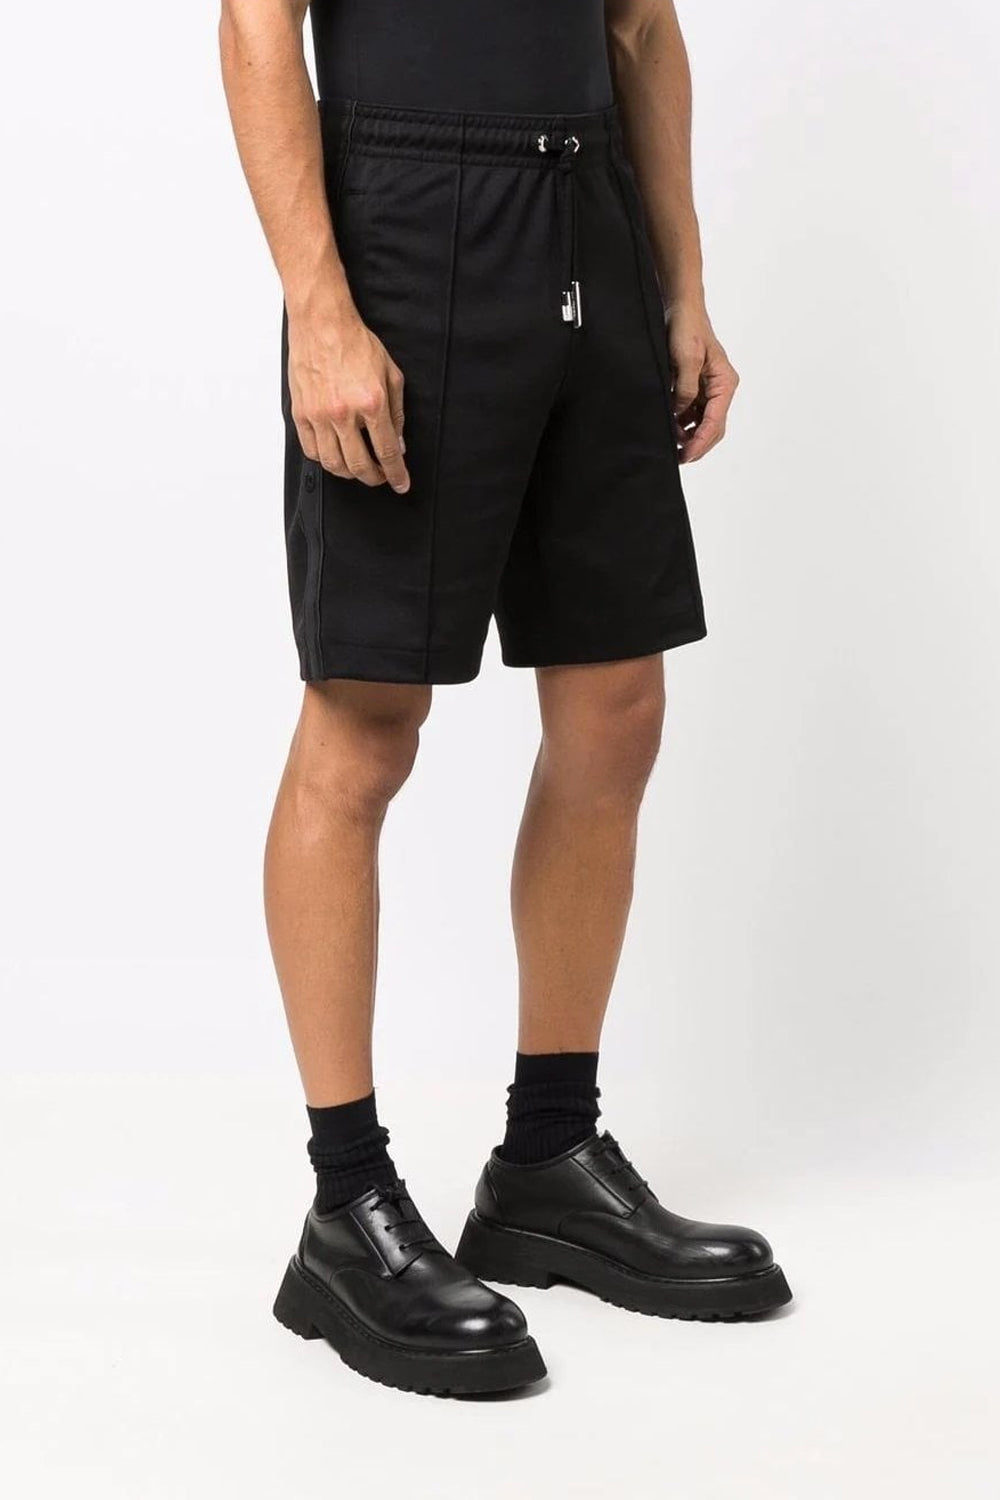 Givenchy track shorts